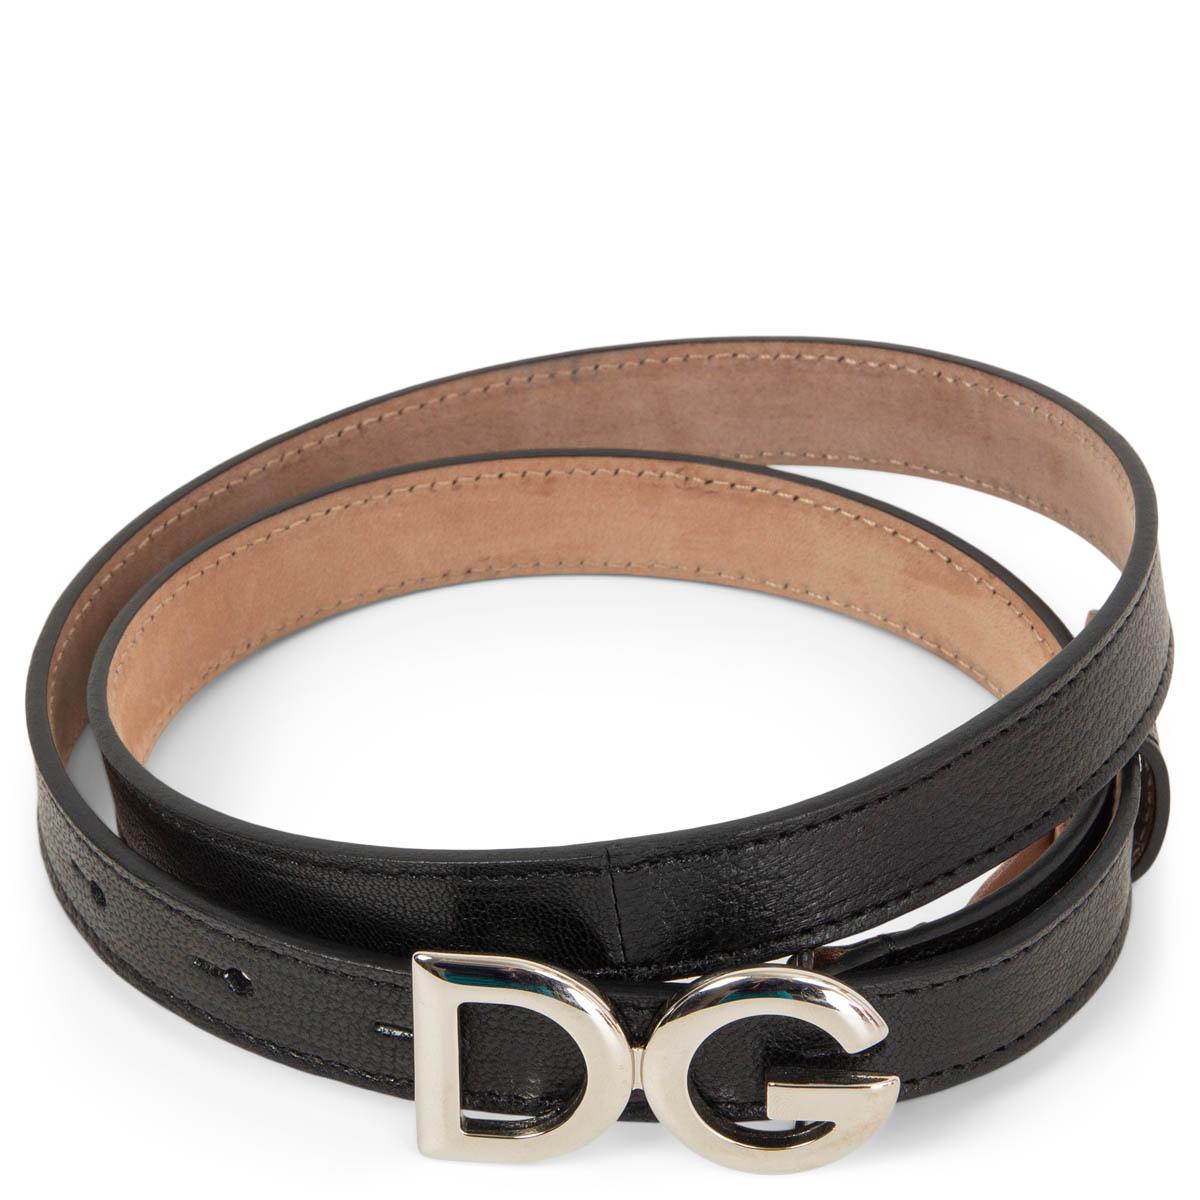 Dg Belt - 5 For Sale on 1stDibs | dg belt sale, dg belts, dg belt cheap